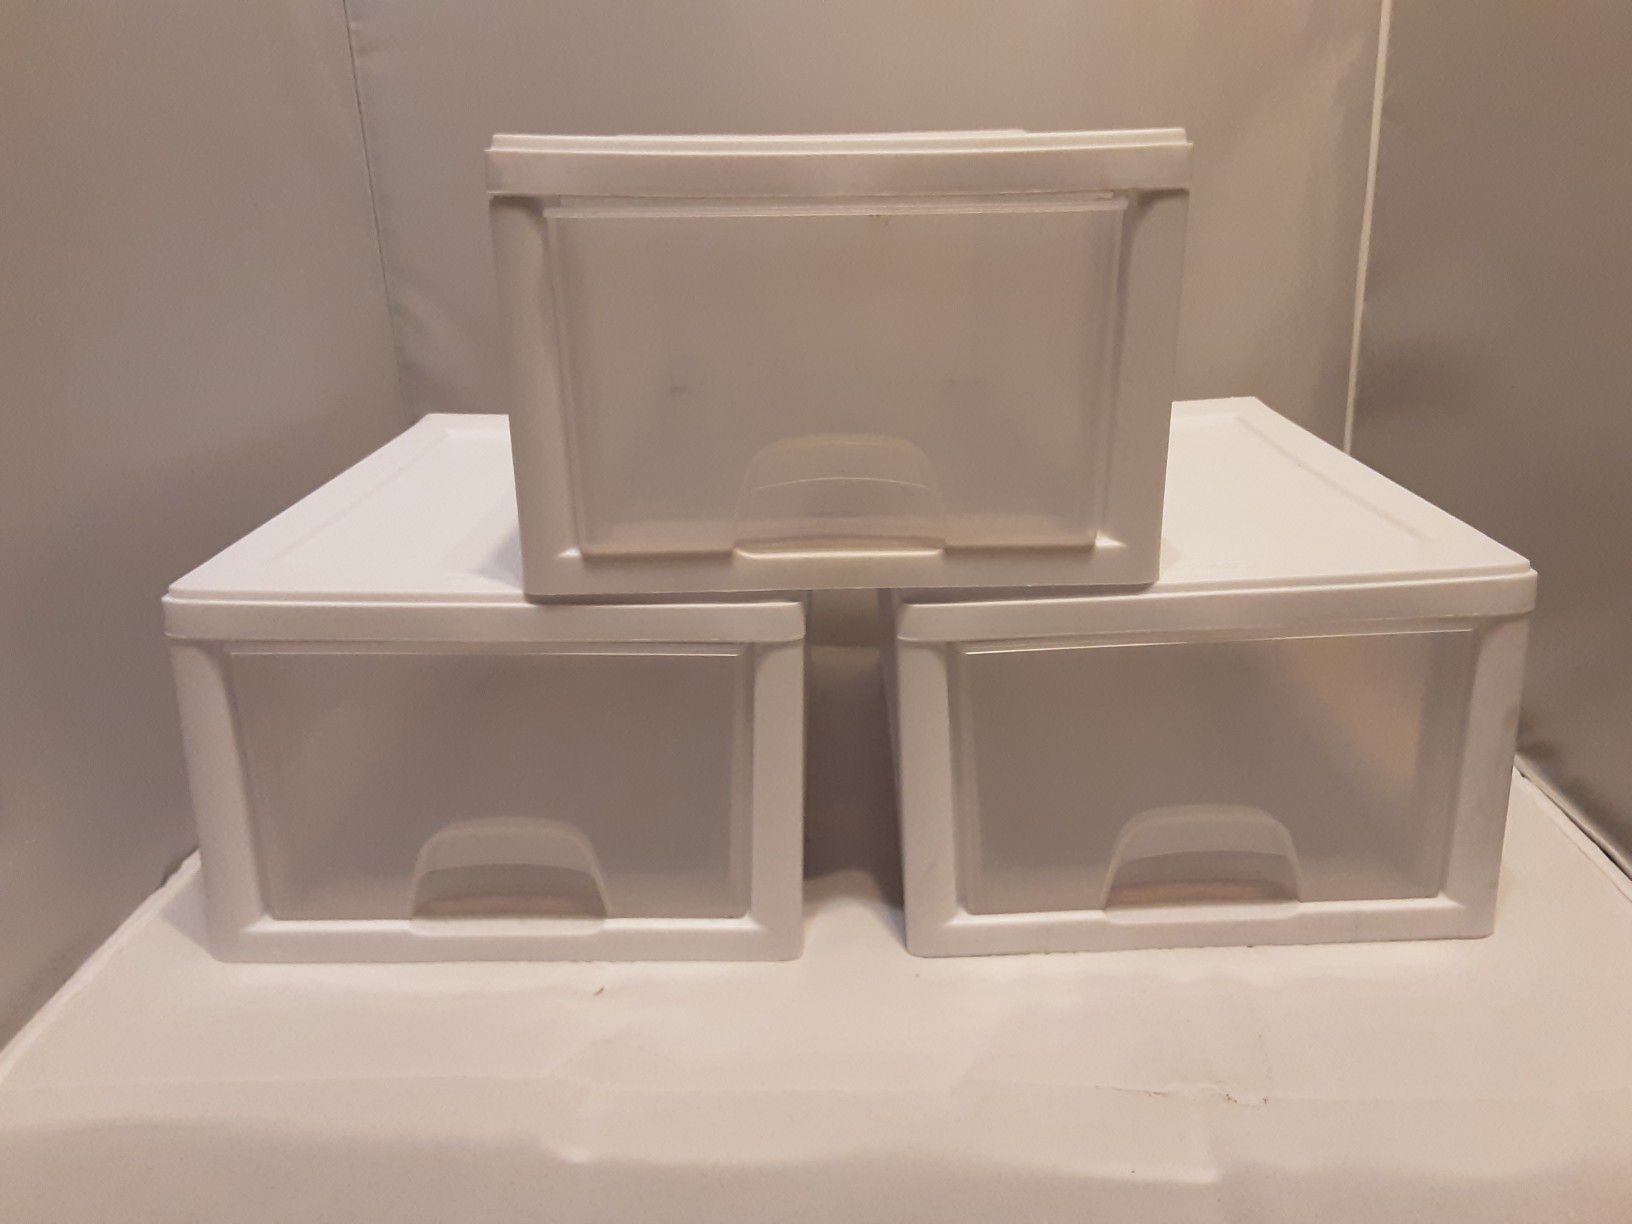 Three Plastic Organizer Storage Drawer Boxes